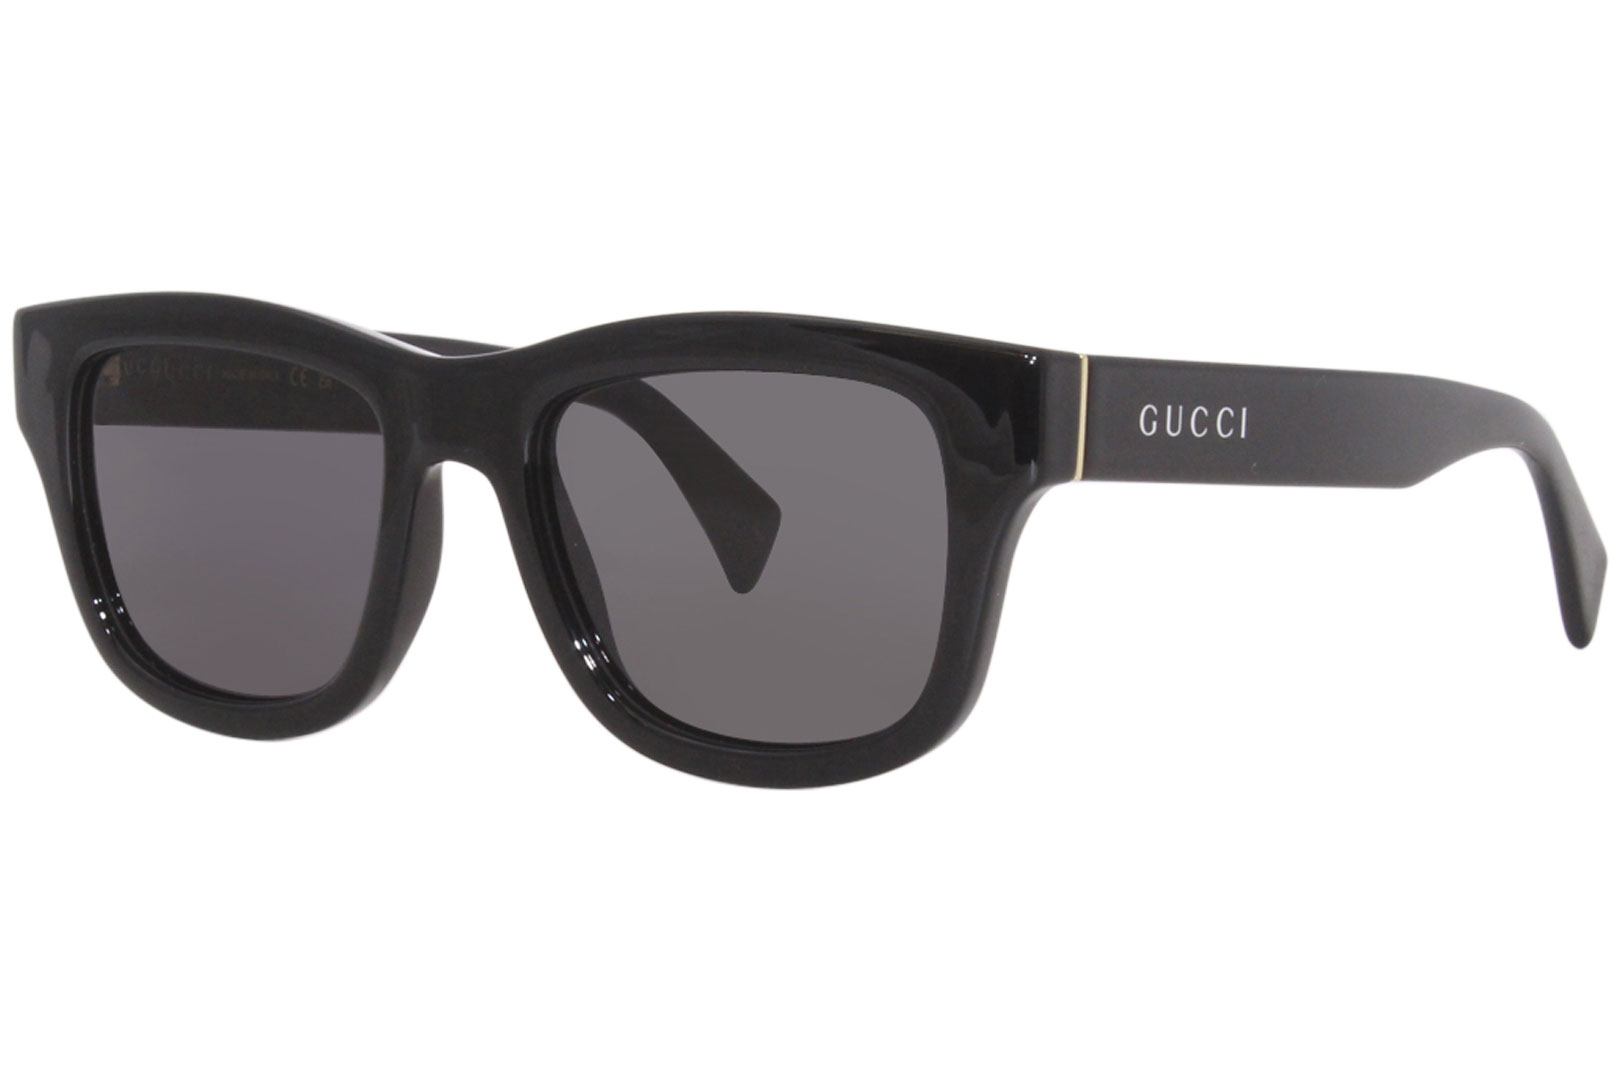 Gucci GG1135S Sunglasses Men's Square Shape | EyeSpecs.com